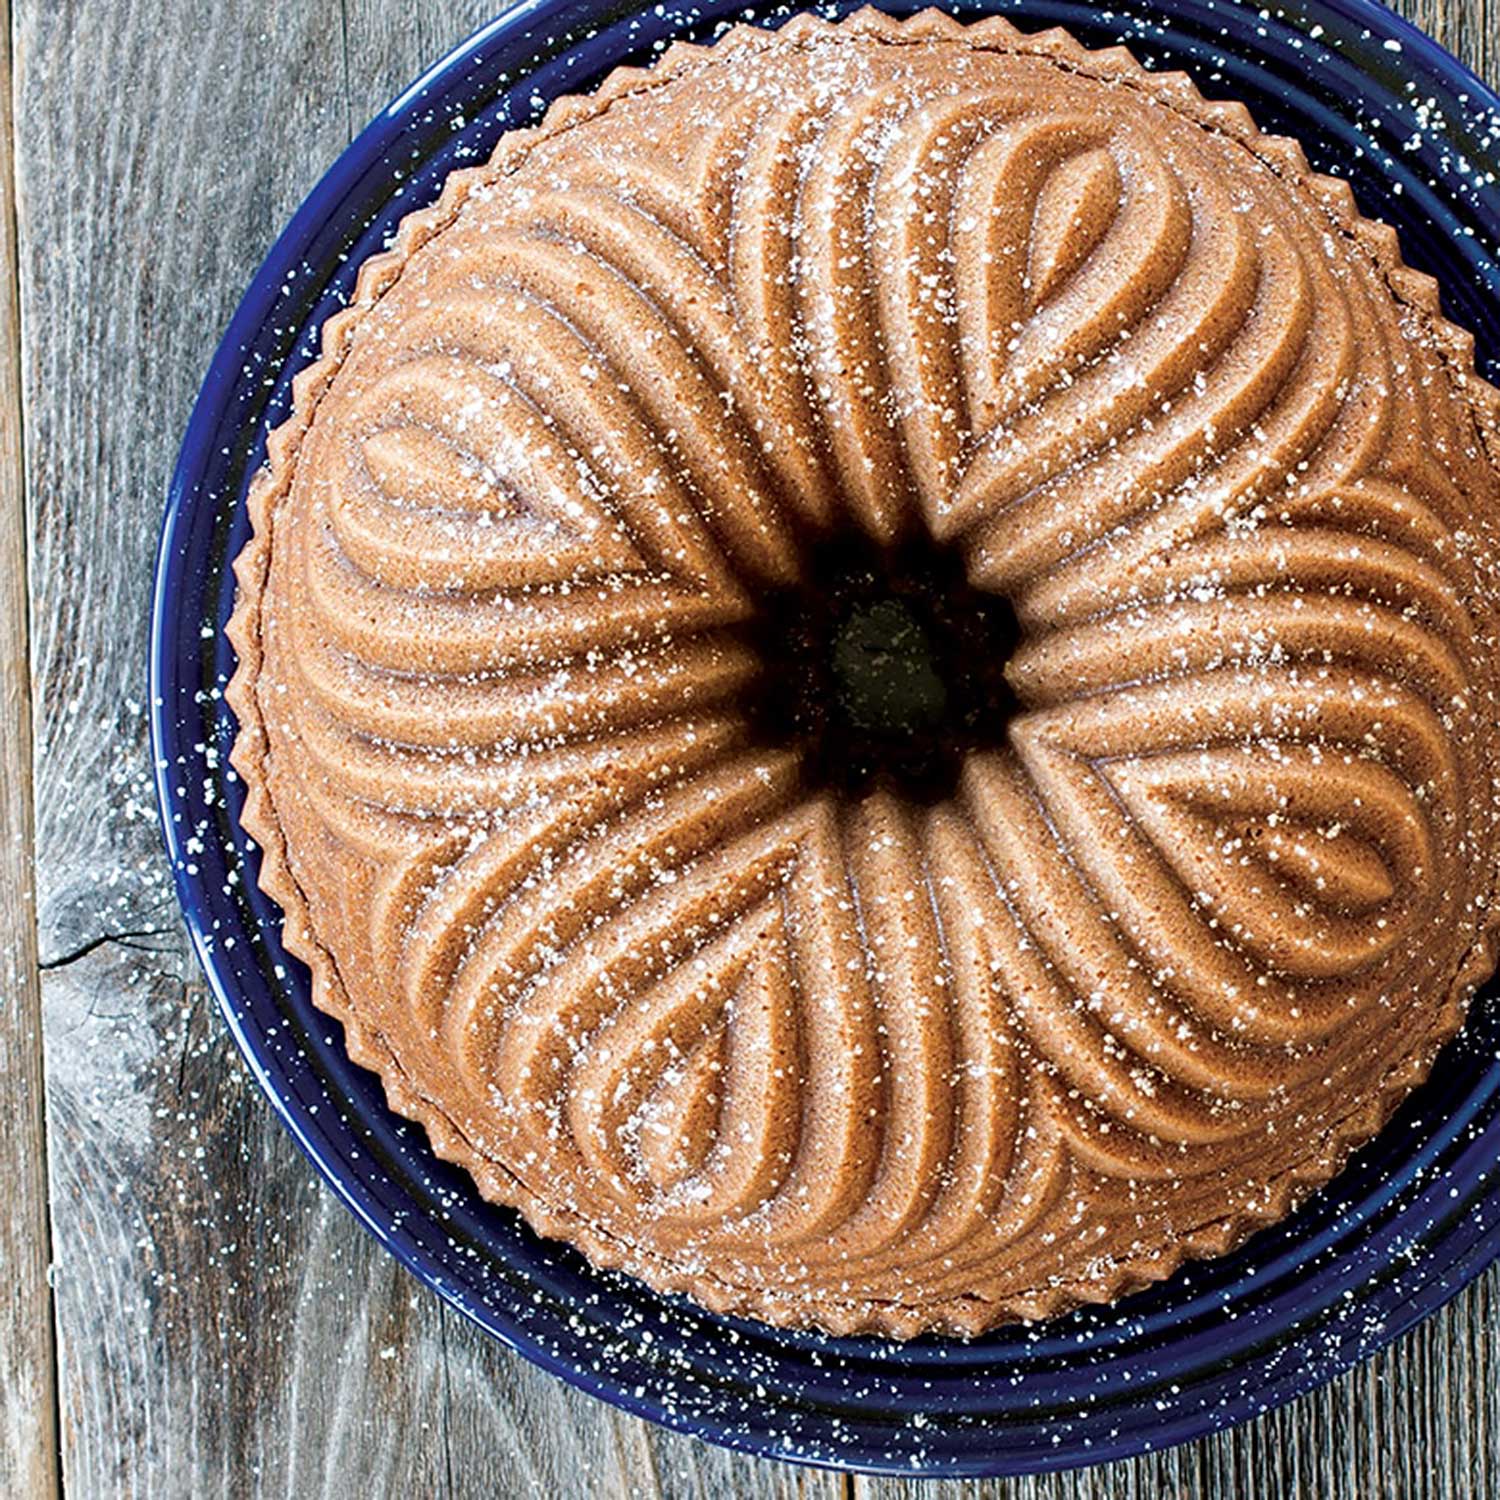 Nordic Ware Microwave Bundt Cake Pans #1 - Country Kitchen SweetArt